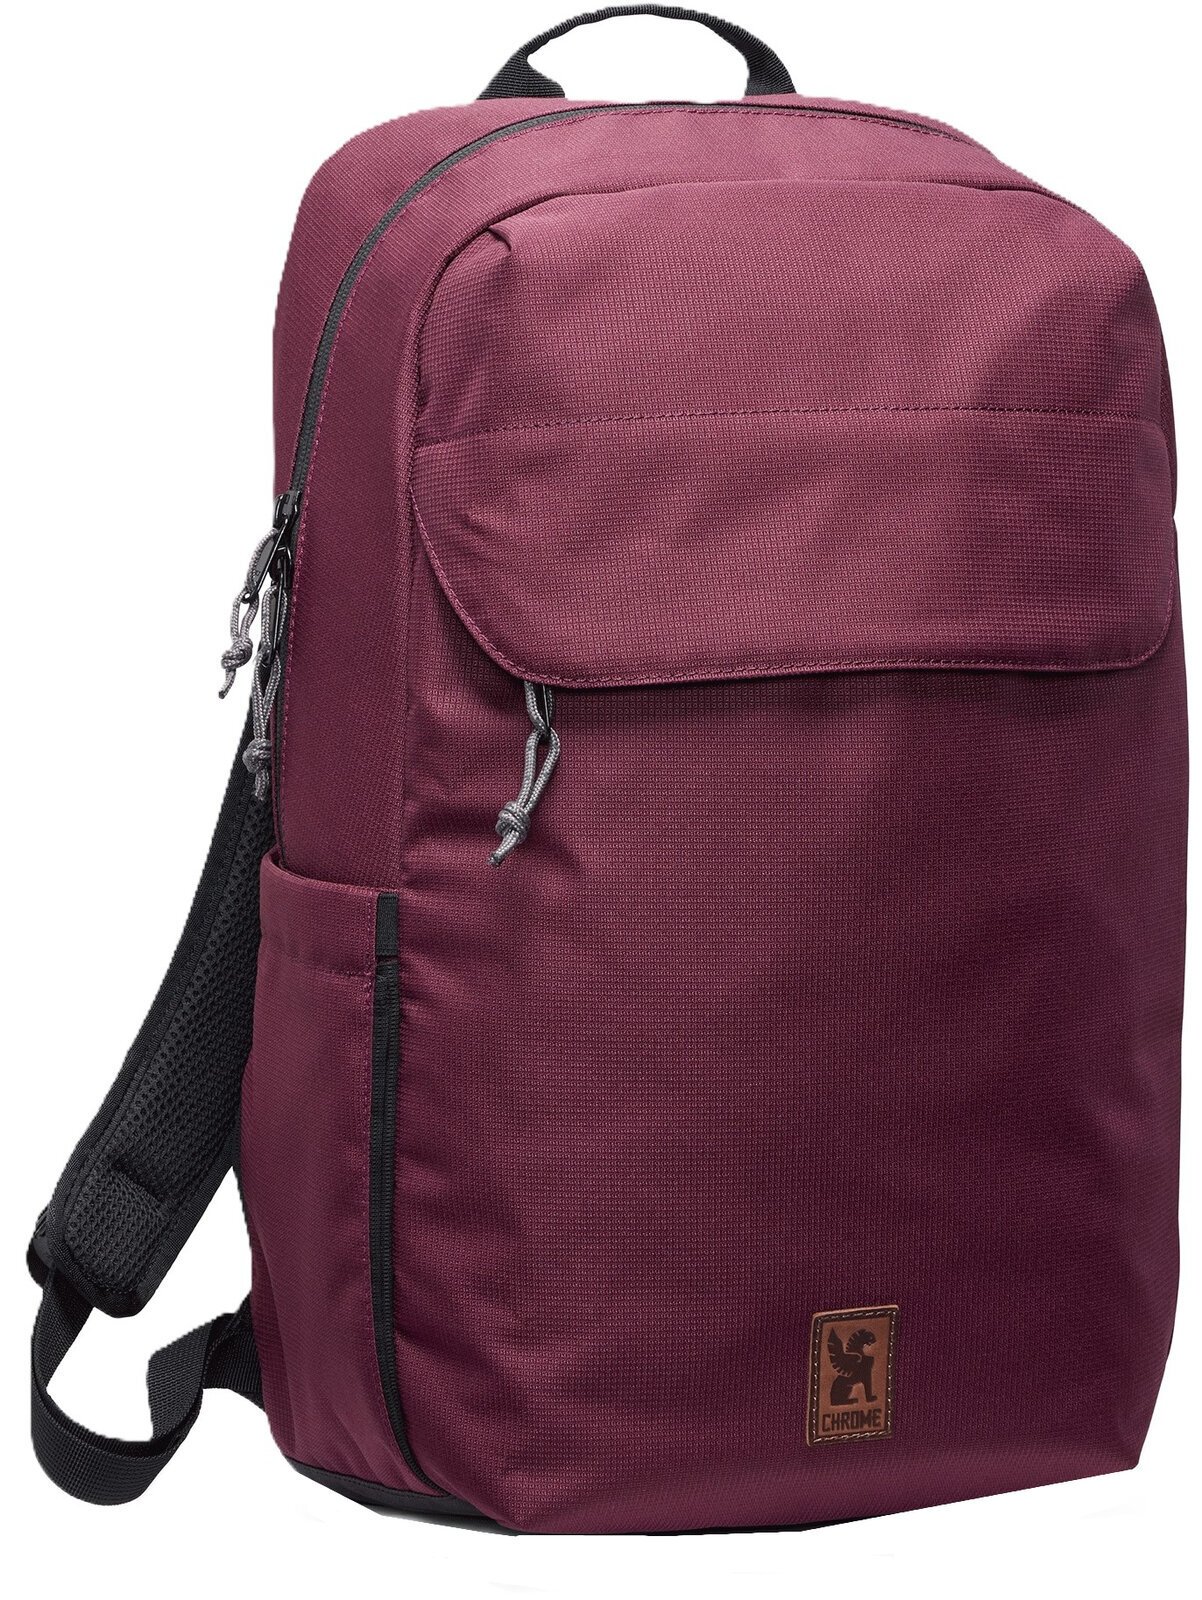 Lifestyle Rucksäck / Tasche Chrome Ruckas Backpack Royale 23 L Rucksack